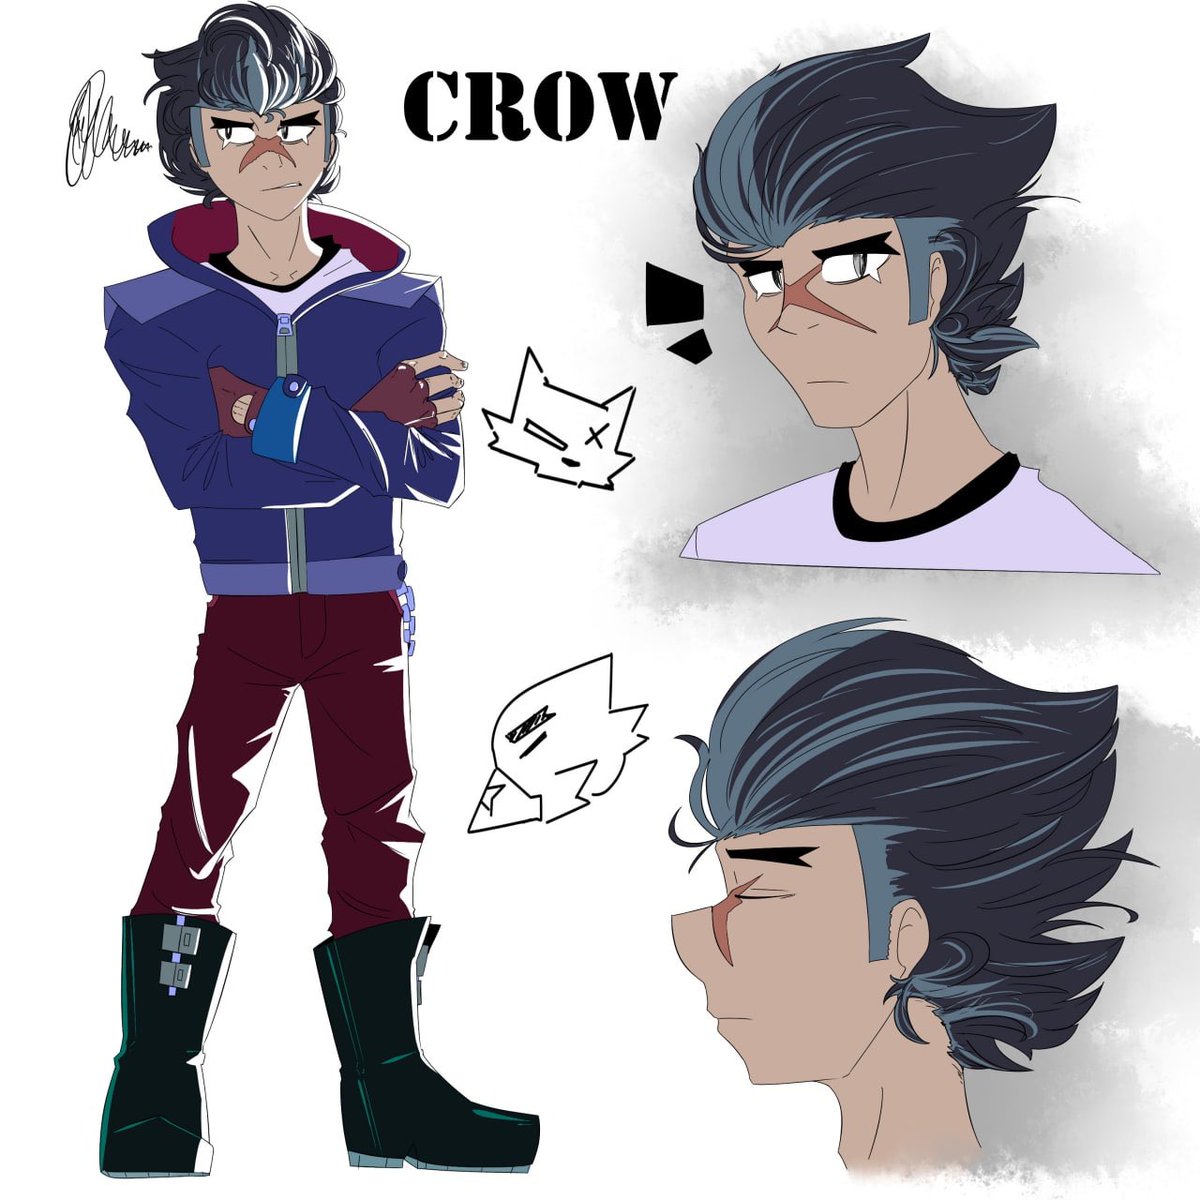 Oneantwo Tamoto Twitter - crow de brawl stars en anime